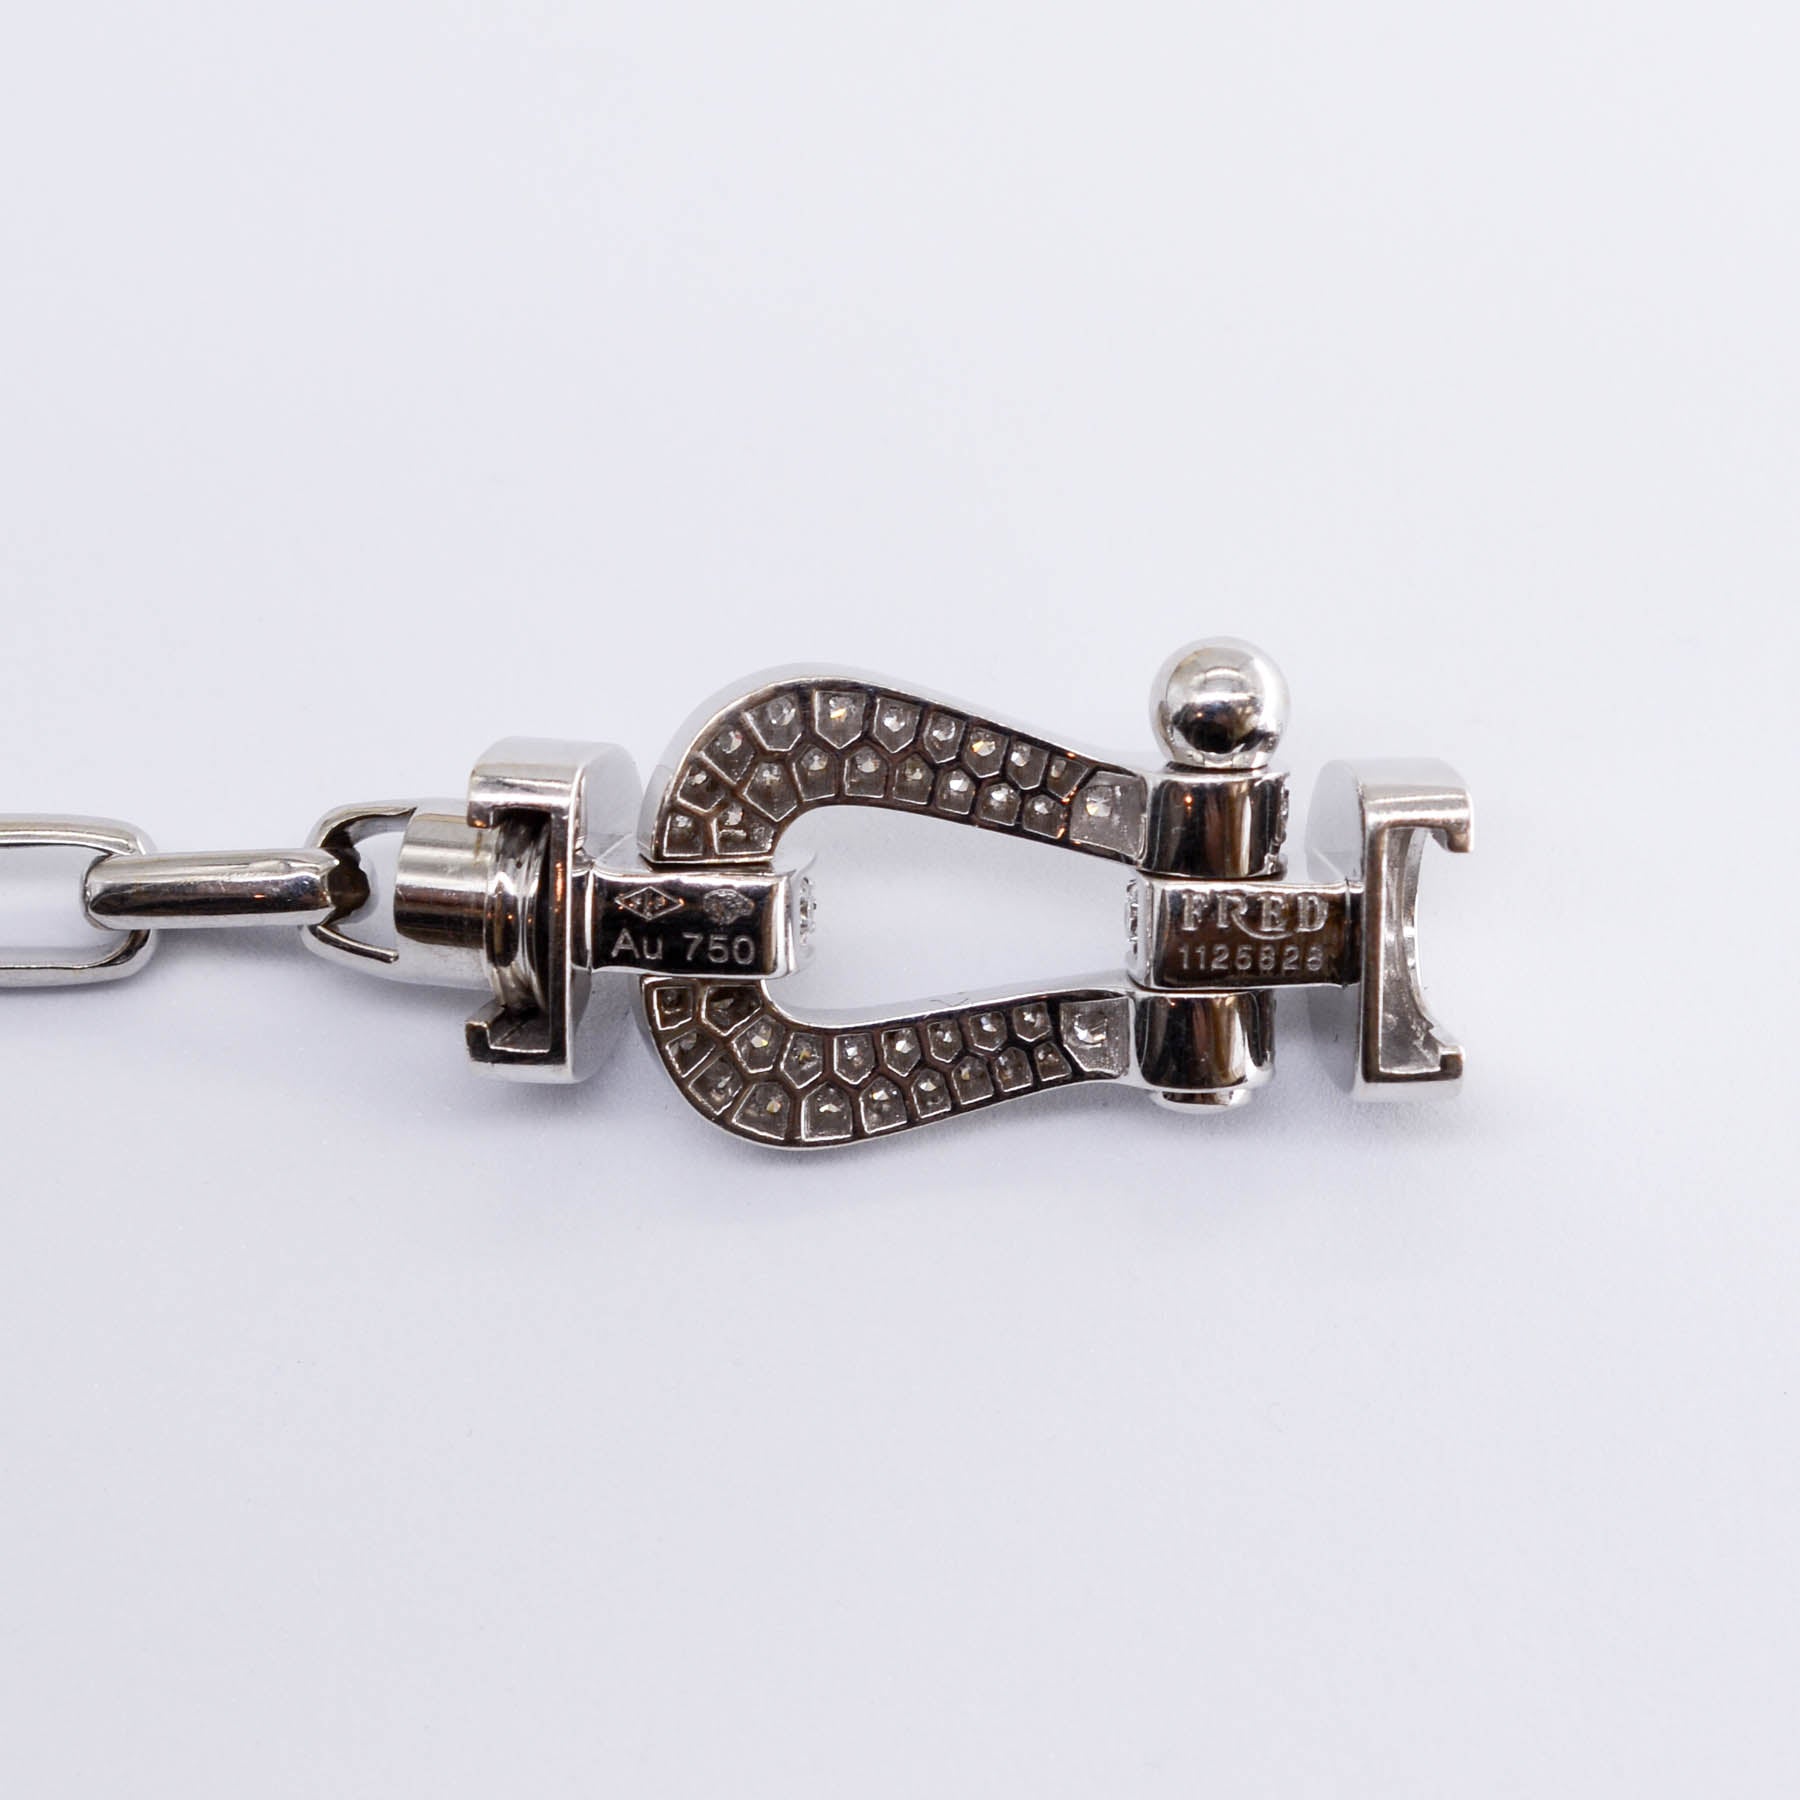 'Fred' Diamond Clasp Chain Bracelet | 0.60ctw | 7